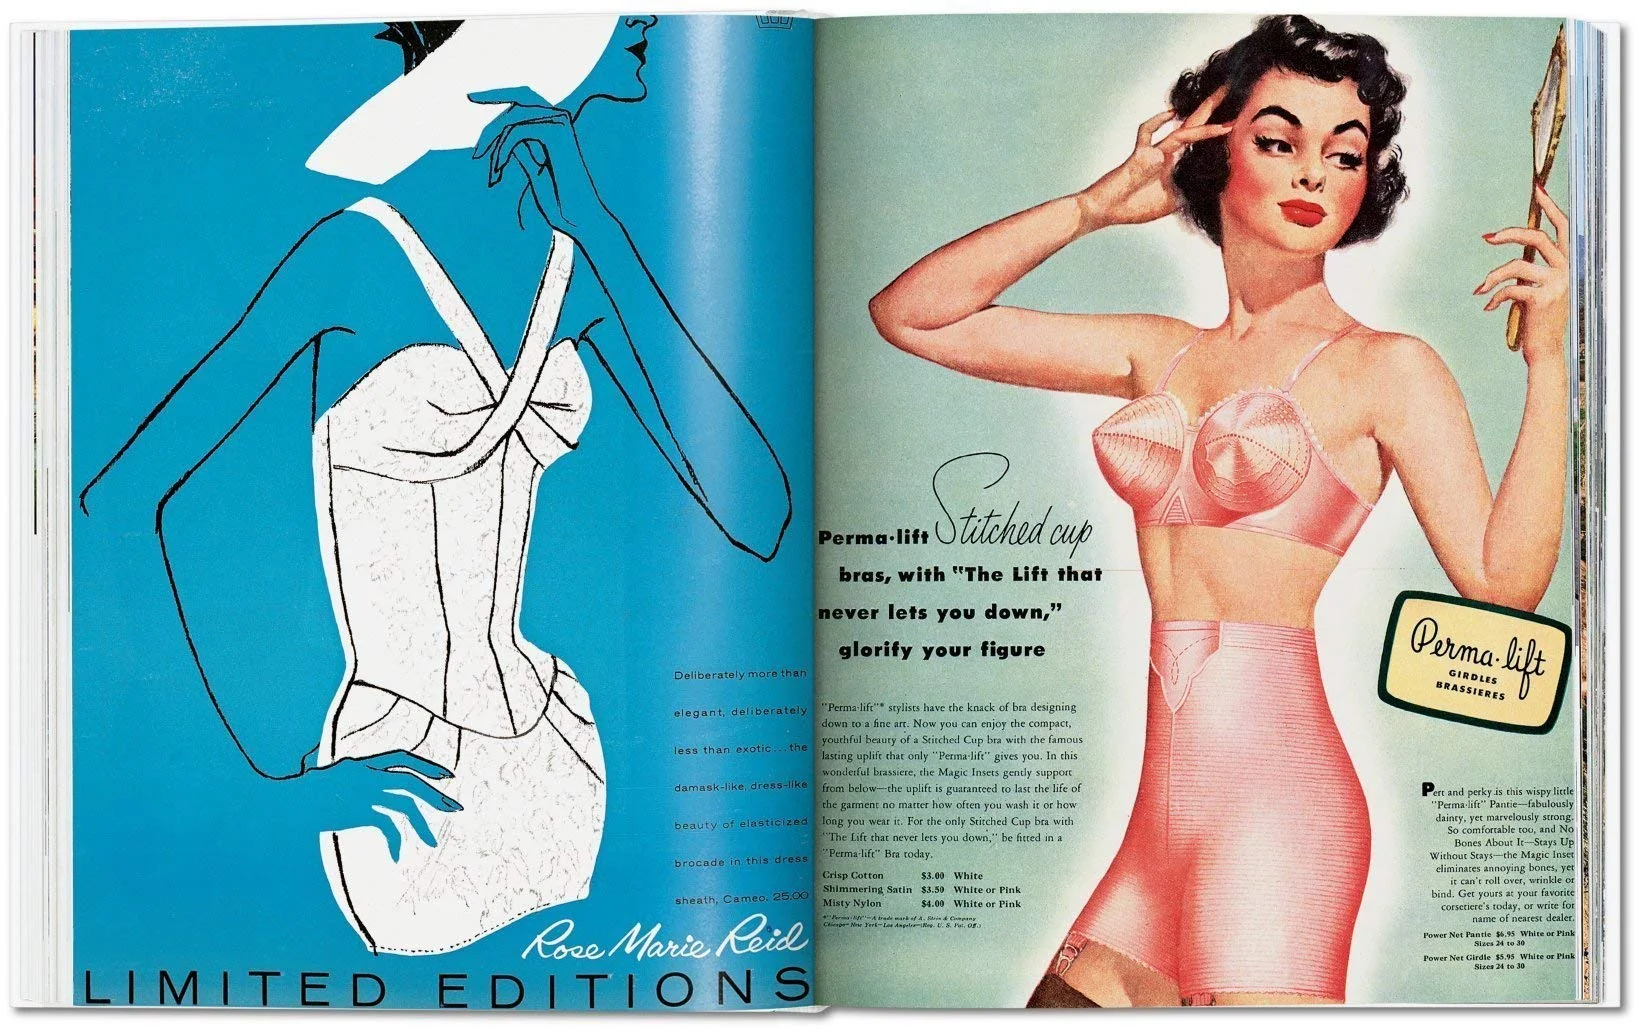 "All American Ads of the 50s" "Вся американская реклама 50-х годов"